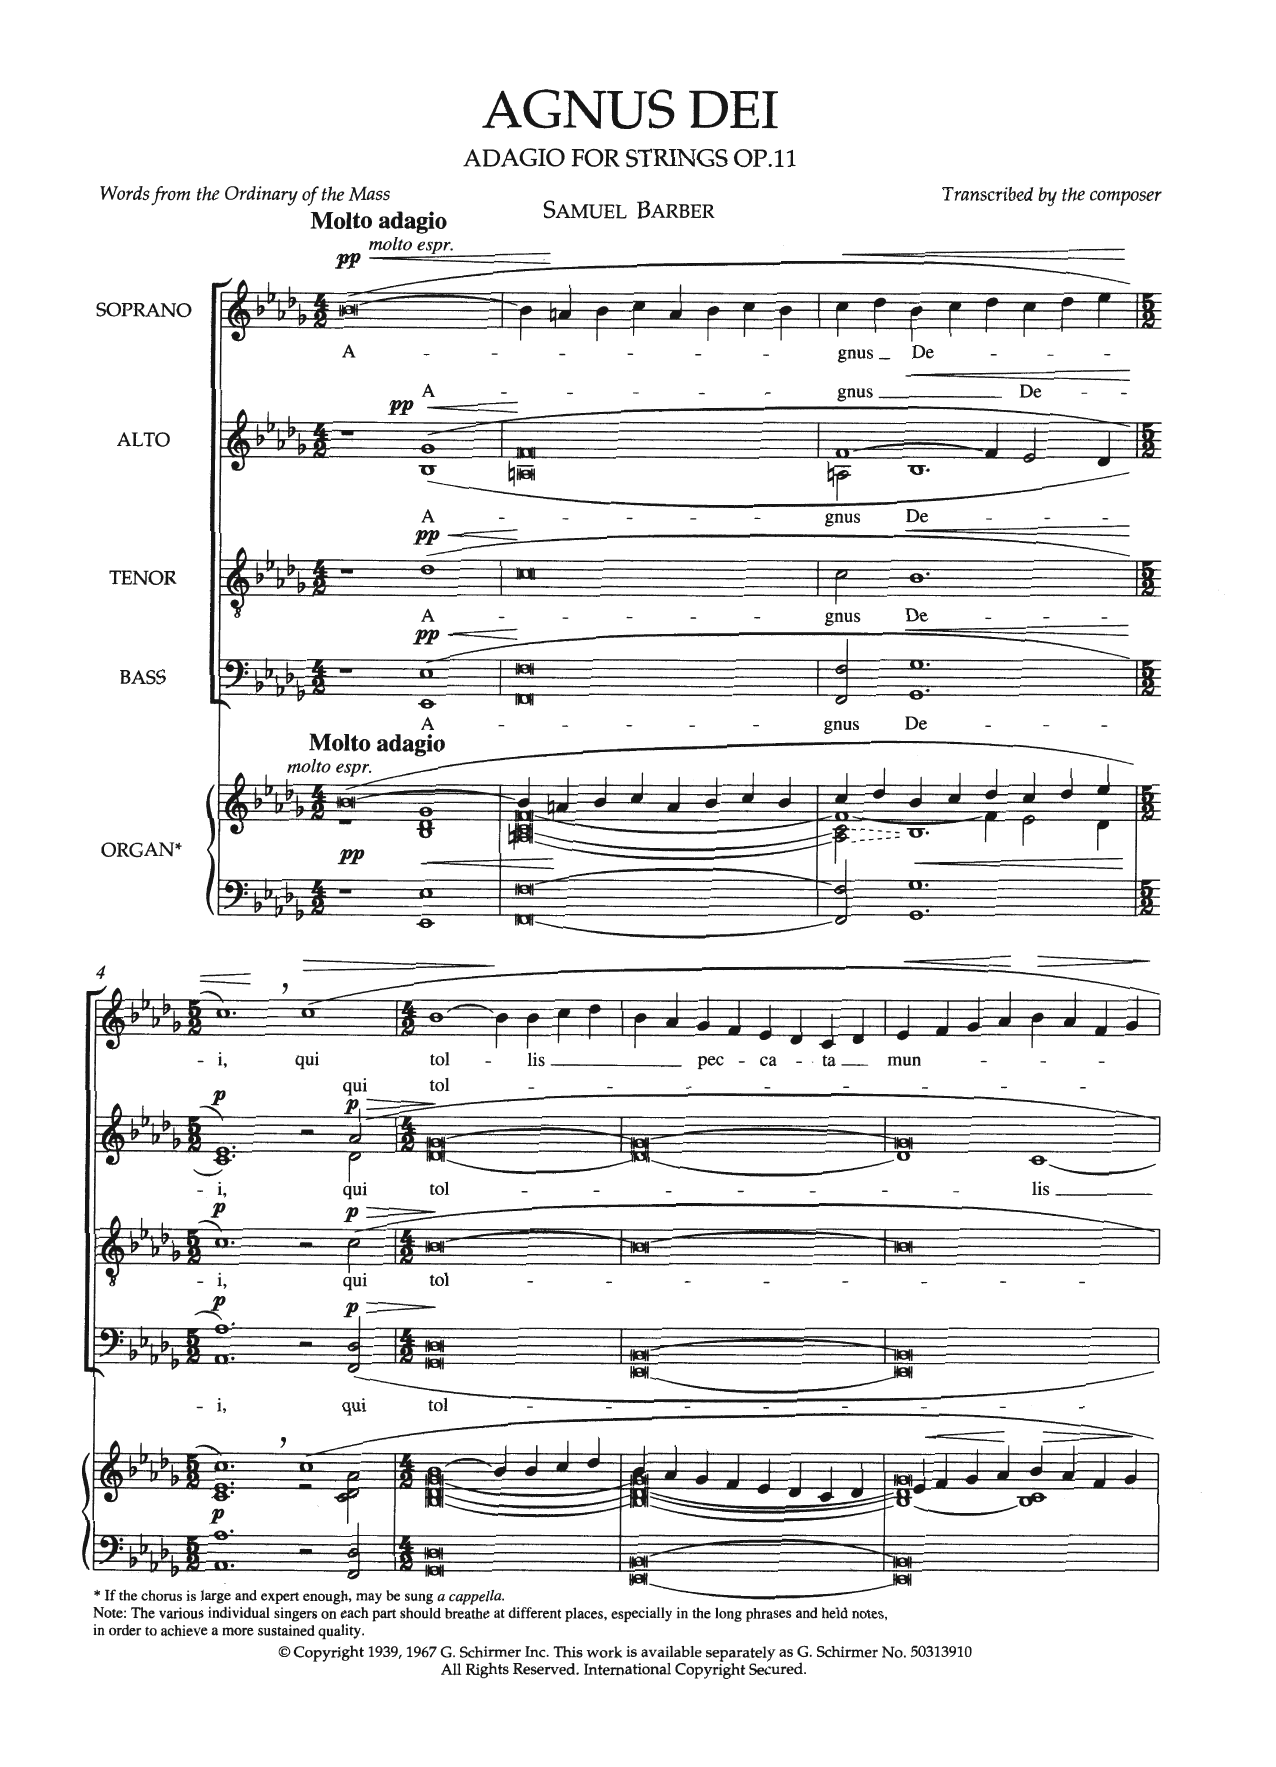 Download Samuel Barber Agnus Dei Sheet Music